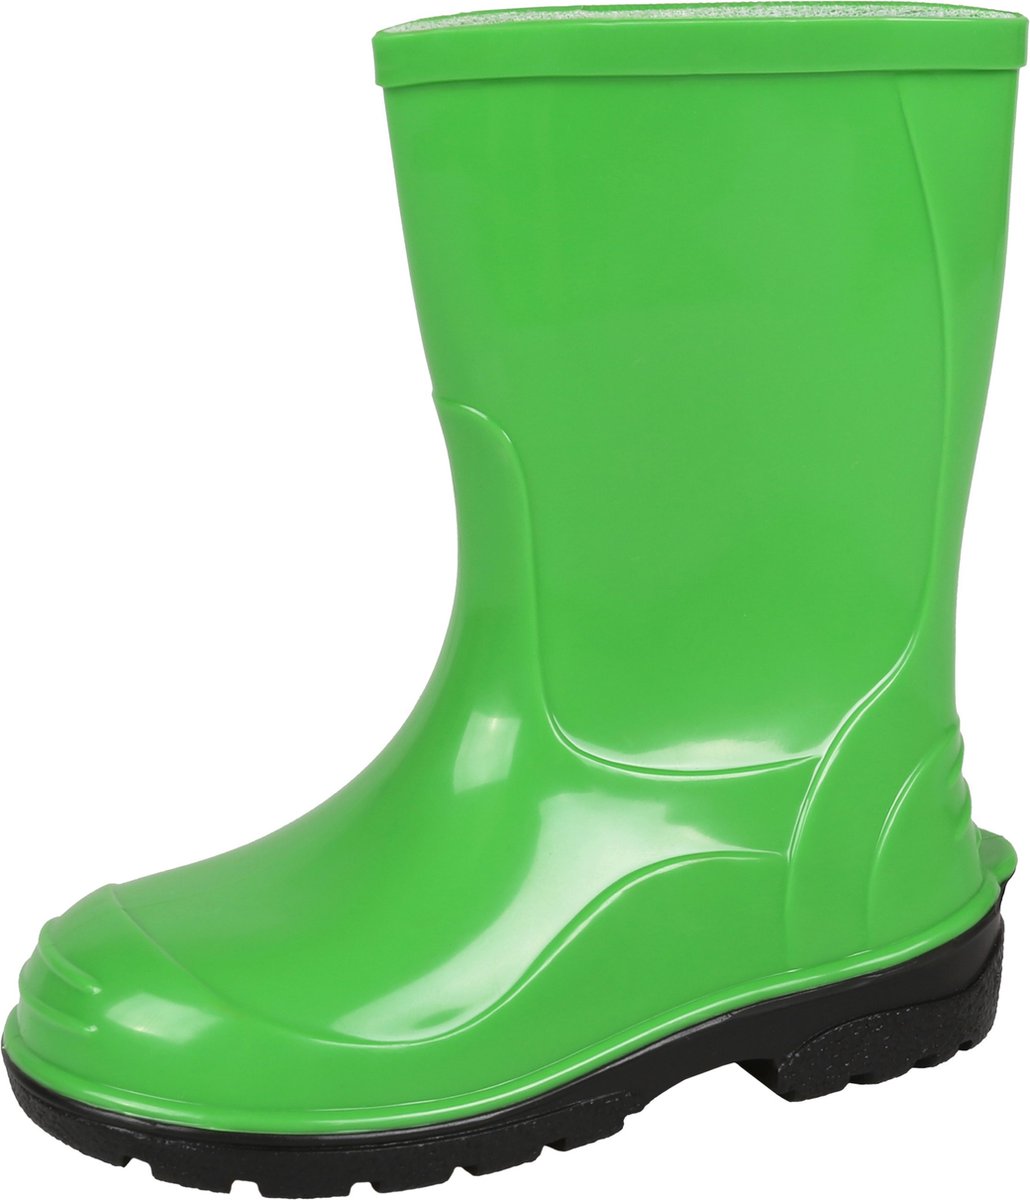 Groene laarzen van PVC materiaal, met antislipzool - OLI LEMIGO / 27